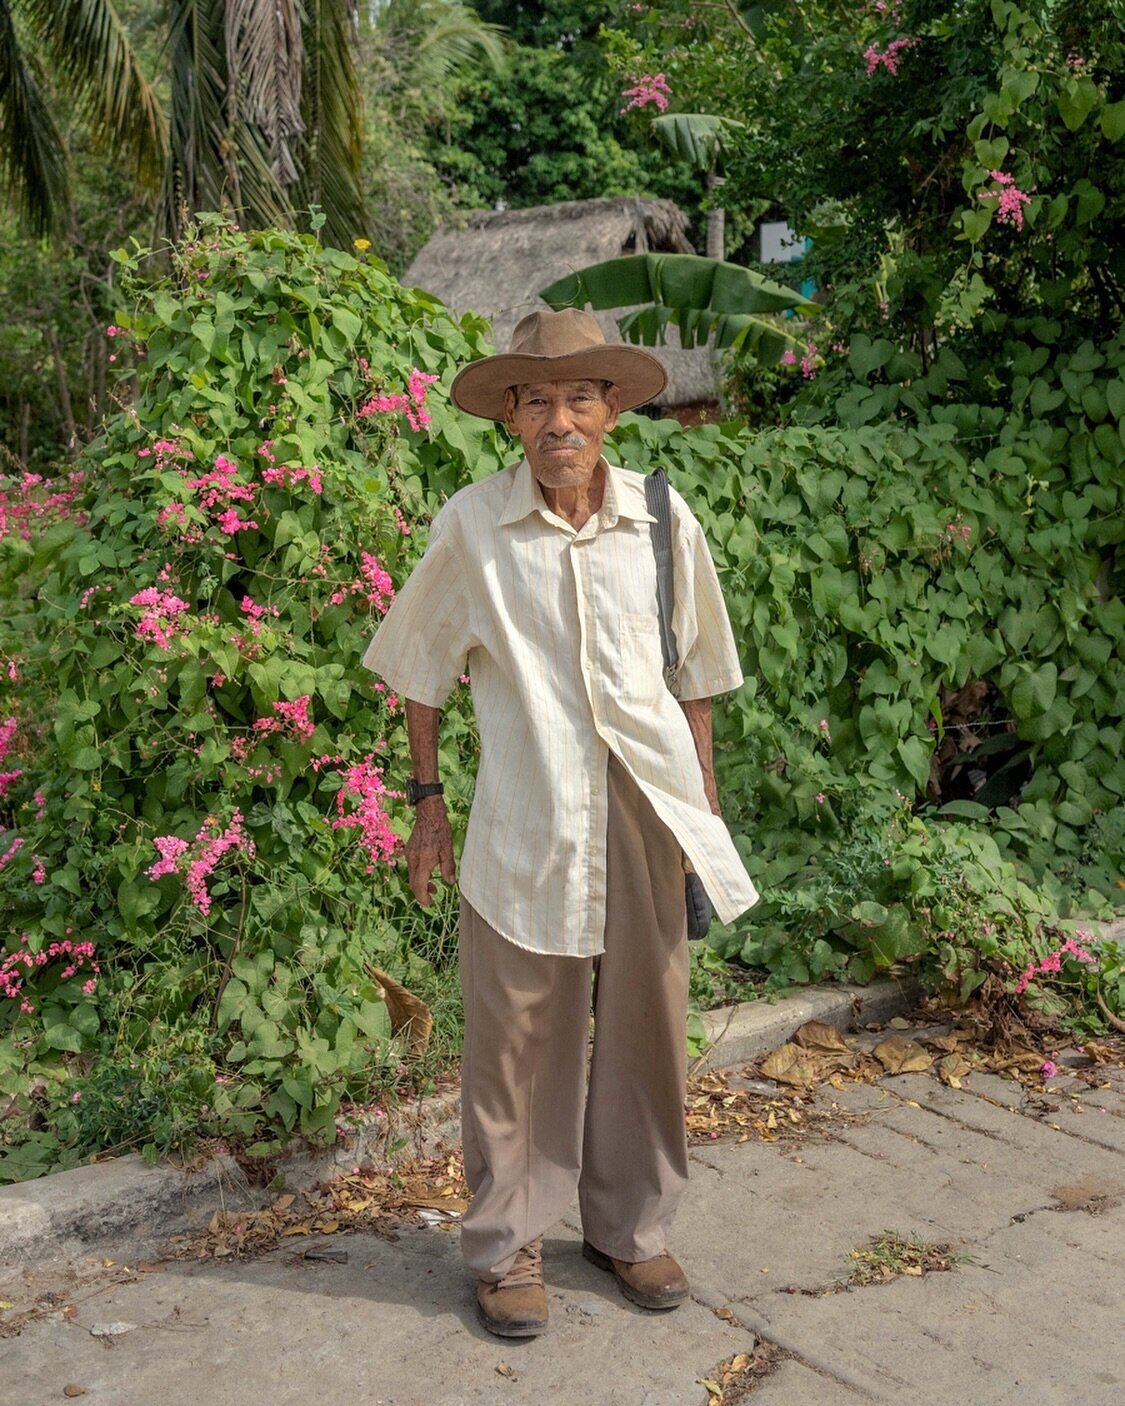 82 year old Benito in Puerto Escondido, Oaxaca